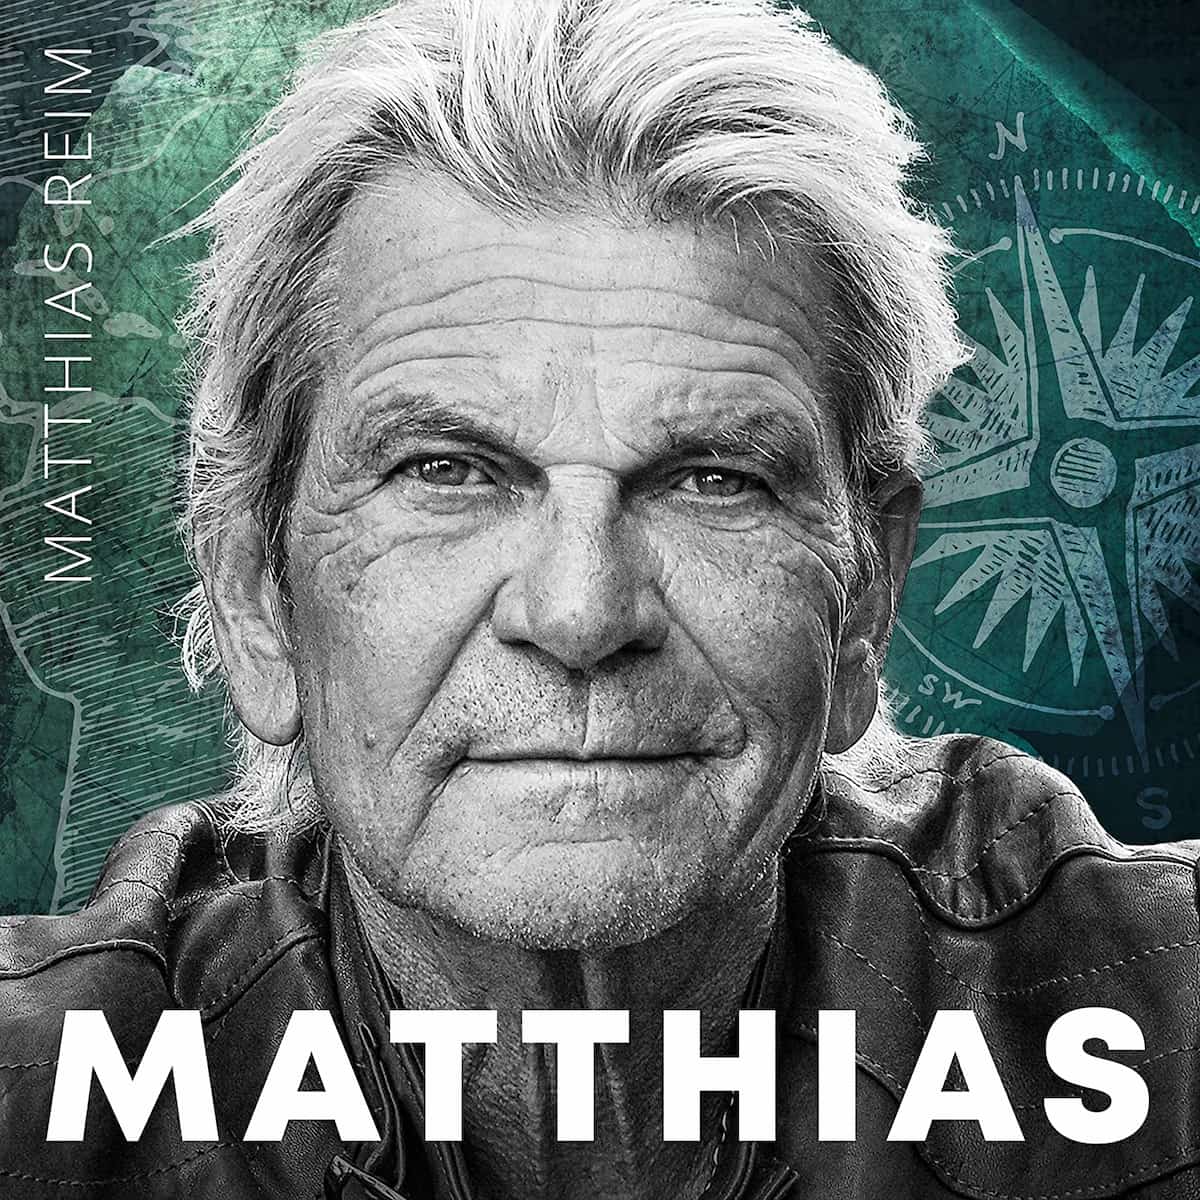 Matthias Reim CD 2022 "Matthias"